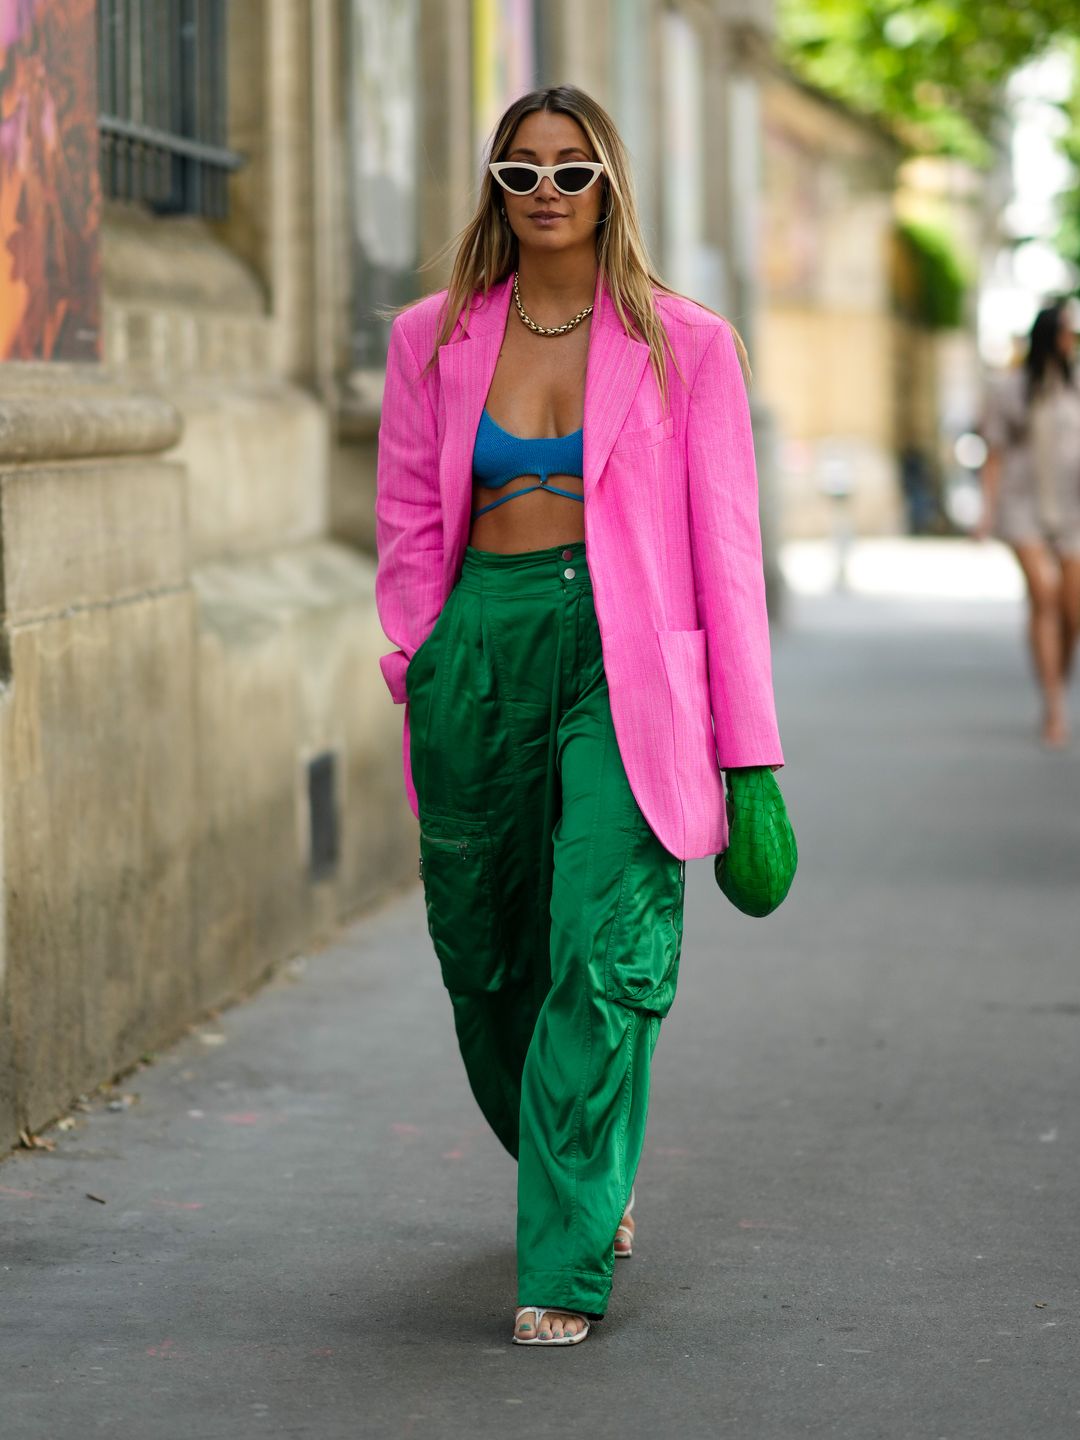 A Paris Fashion Week guest sports a pink linen blazer